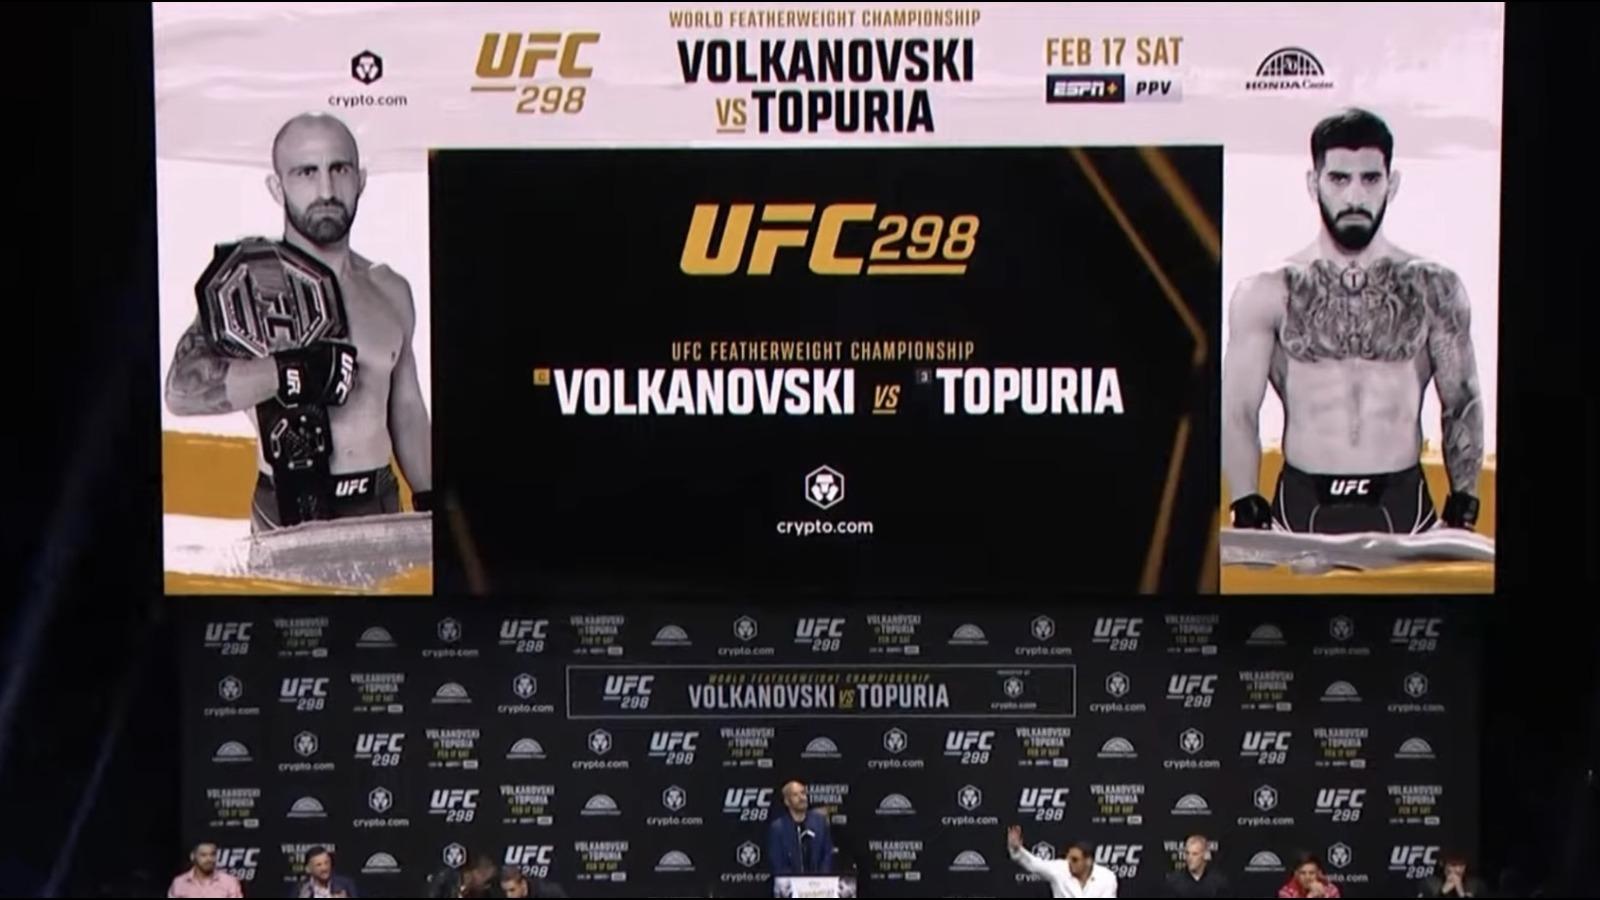 Alexander Volkanovski is set to defend his belt this weekend at UFC 298